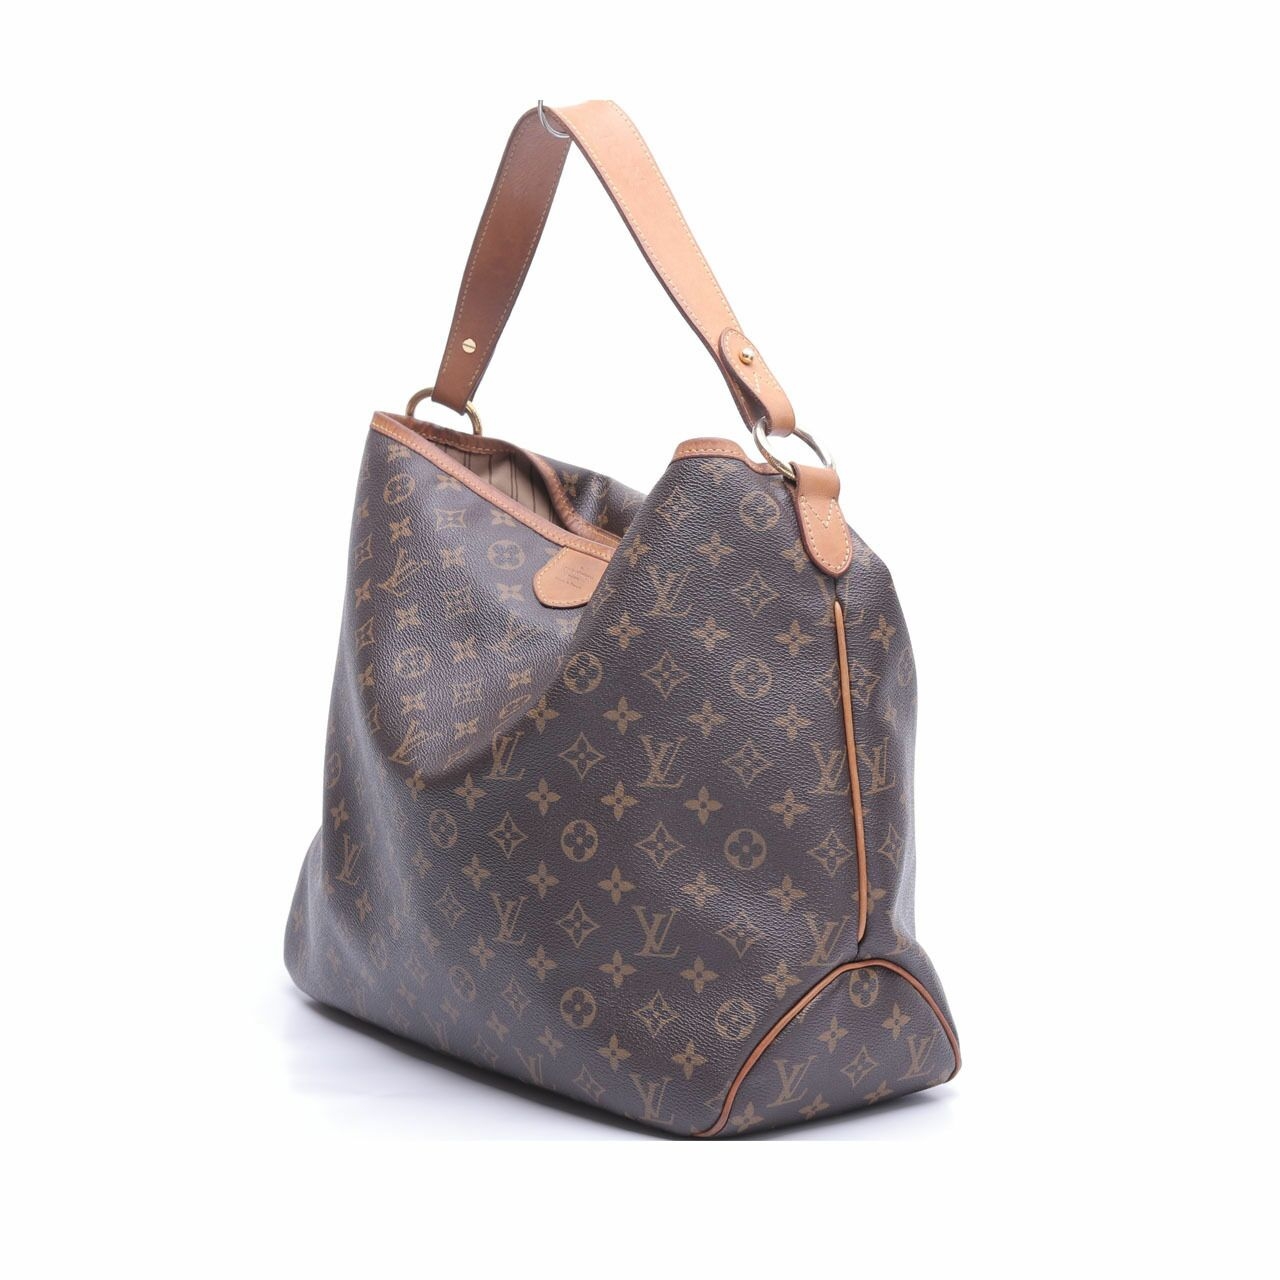 Louis Vuitton Monogram Canvas Delightful Brown Shoulder Bag